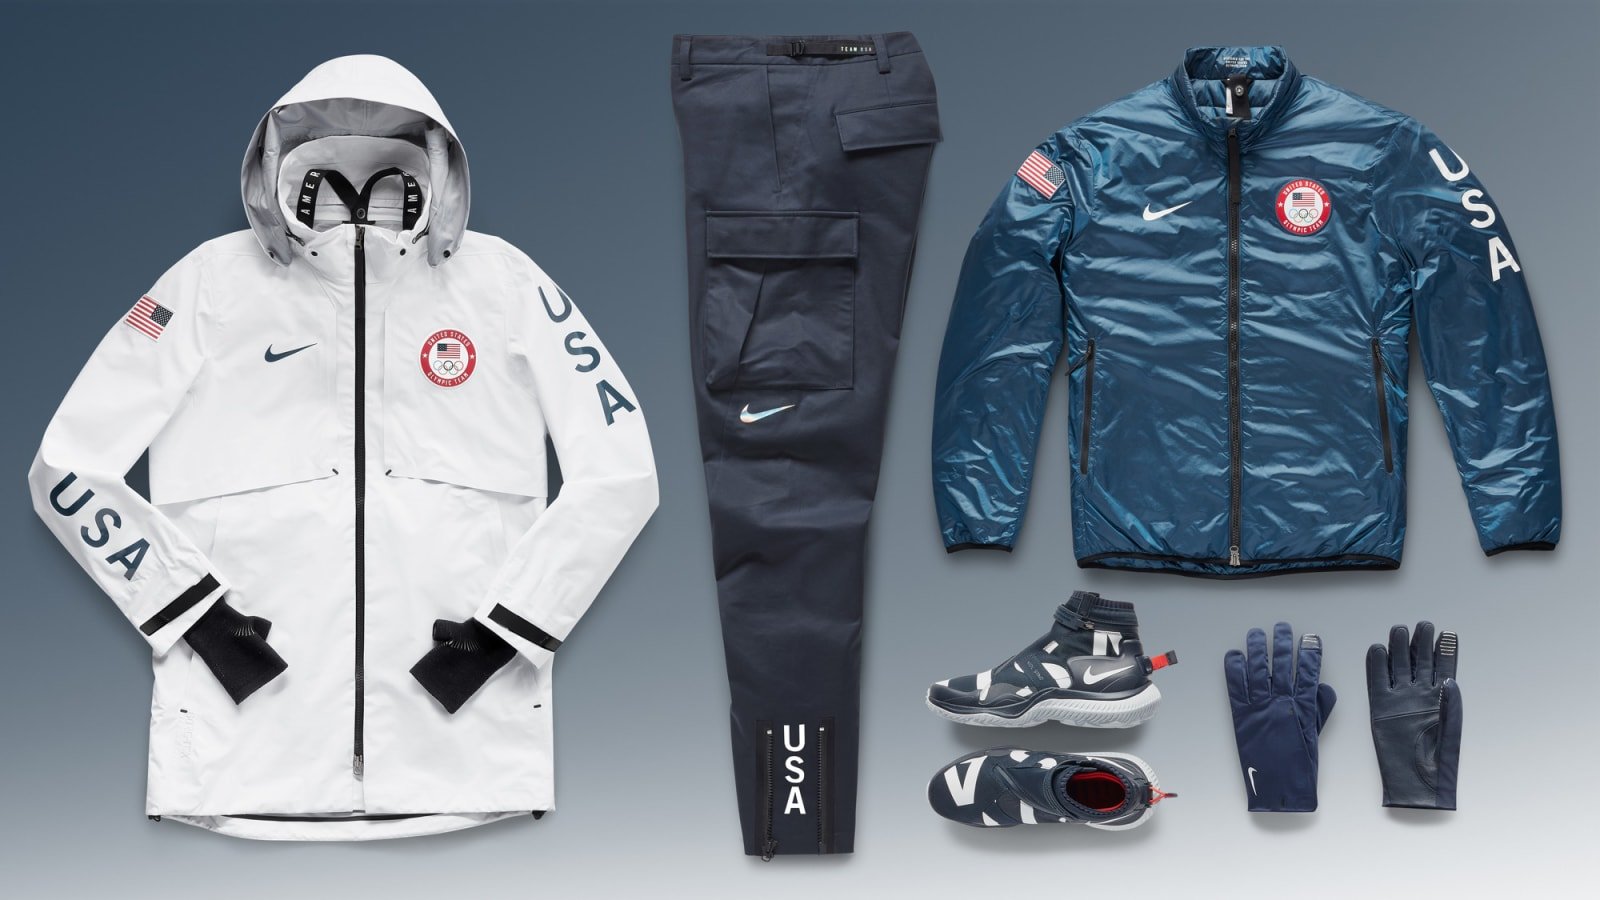 nike-team-usa-medal-stand-apparel-2018-winter-olympics-mens.jpeg